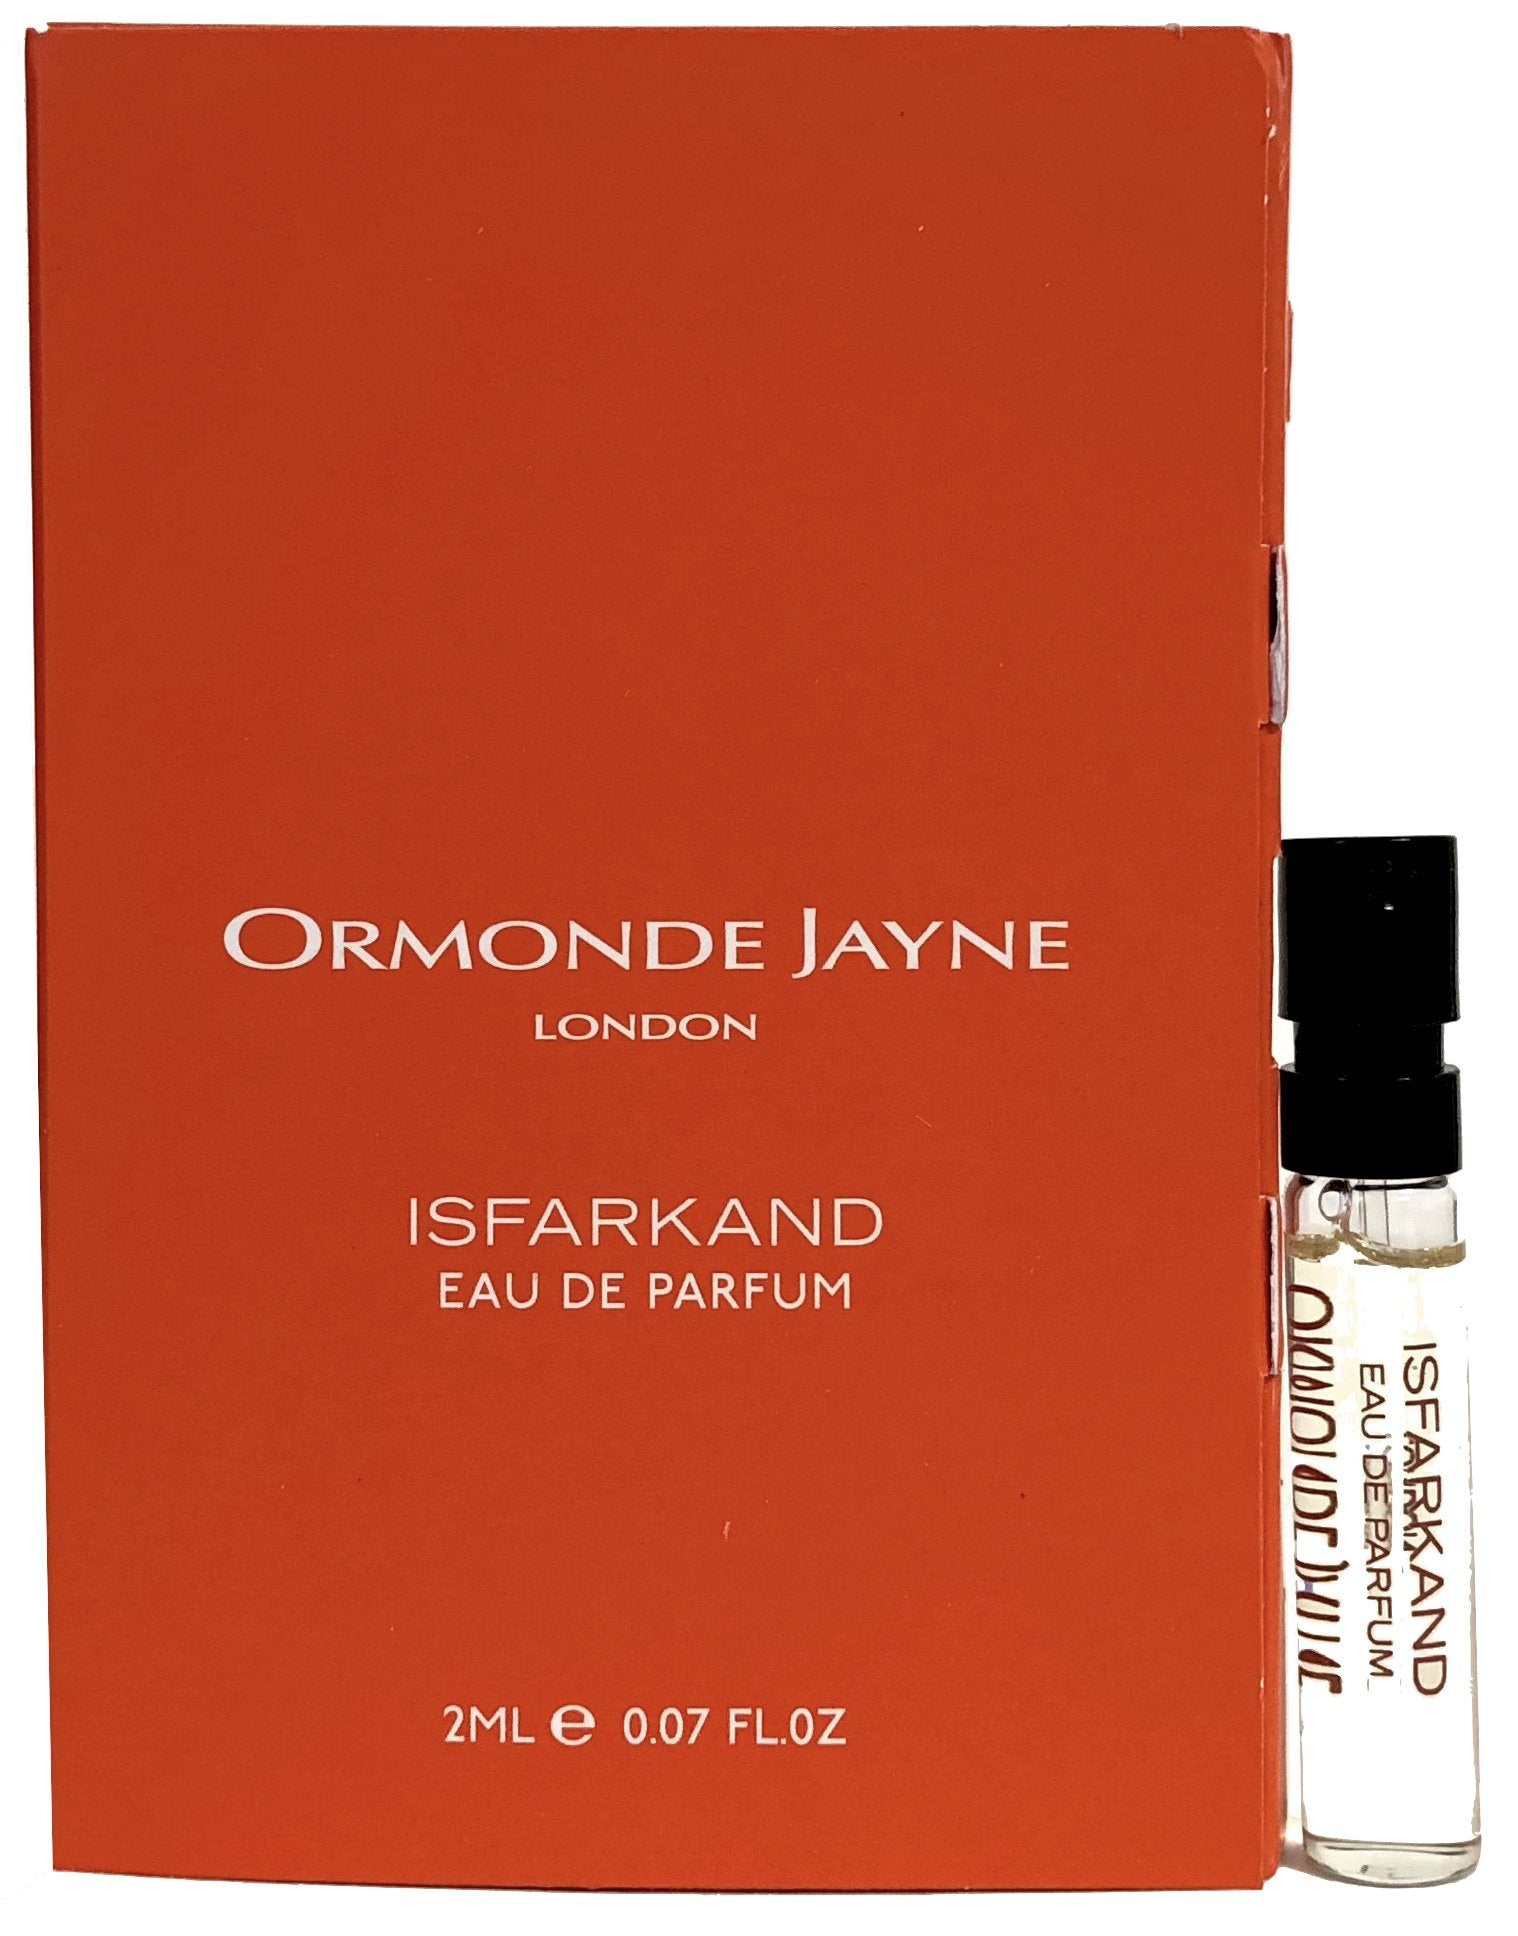 Ormonde Jayne Isfarkand 2ml officiella parfymprover